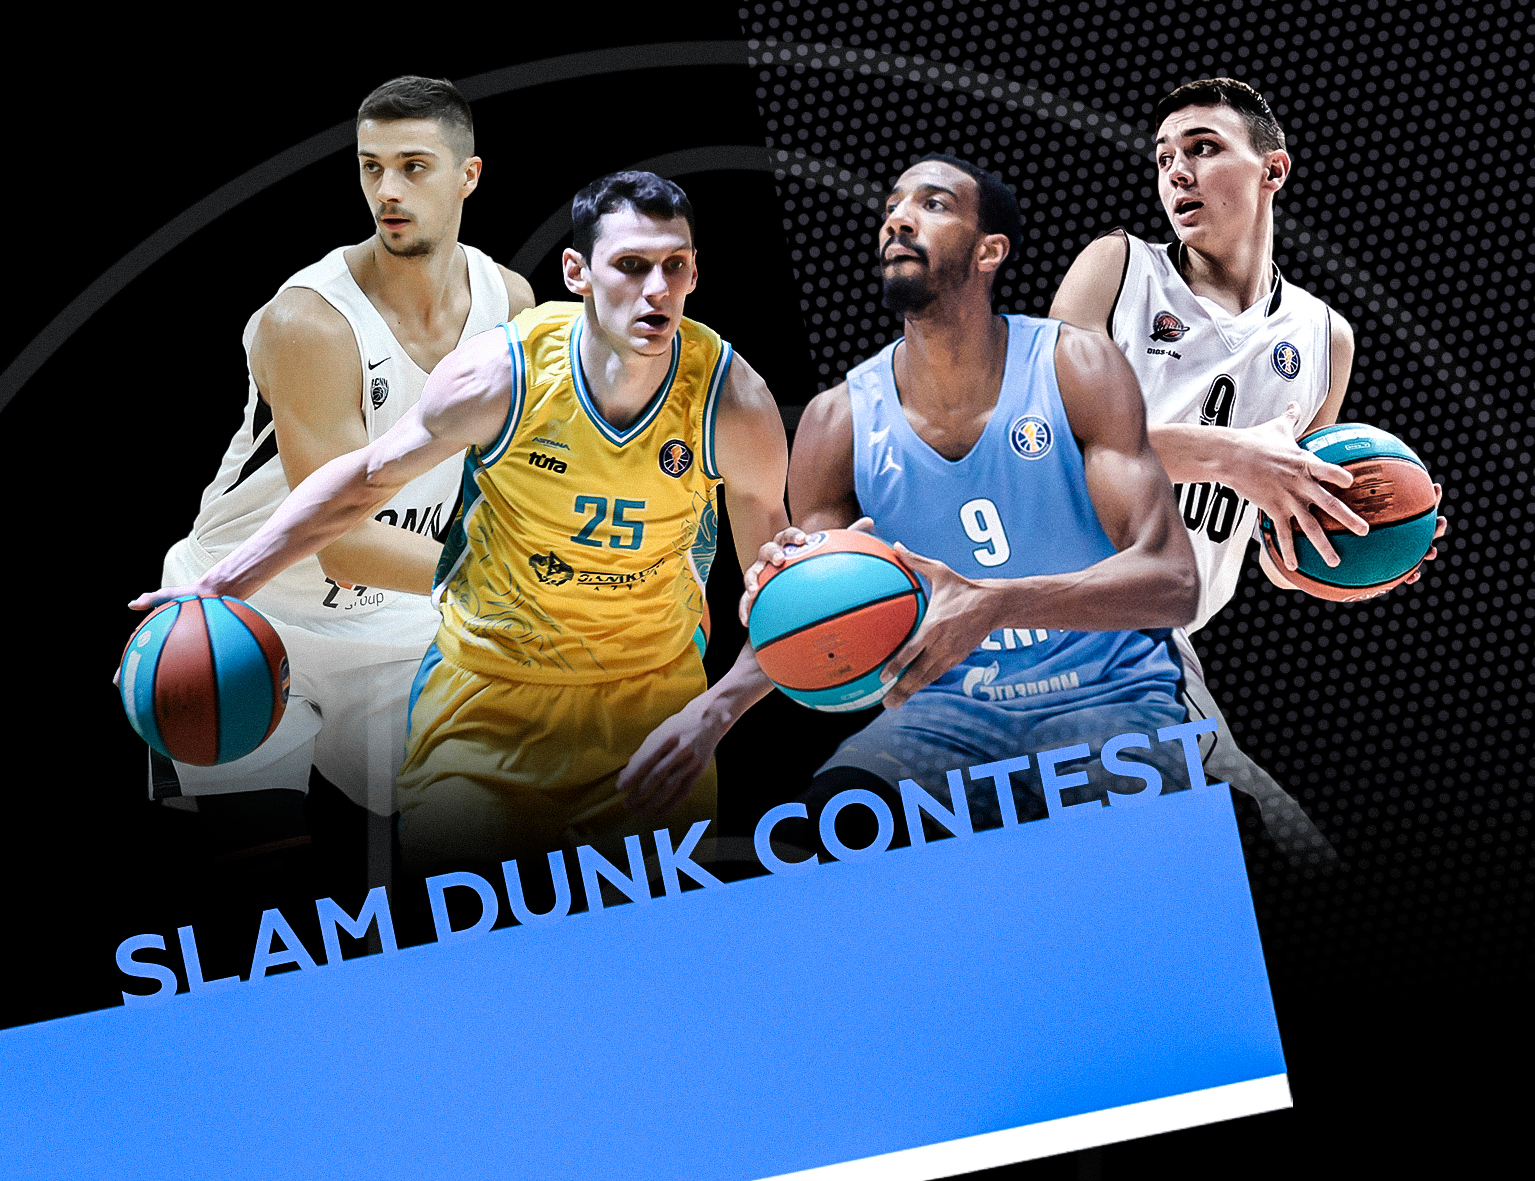 Austin Hollins, Maxim Marchuk, Aleksander Petenev and Anton Astapkovich – slam dunk contest participants